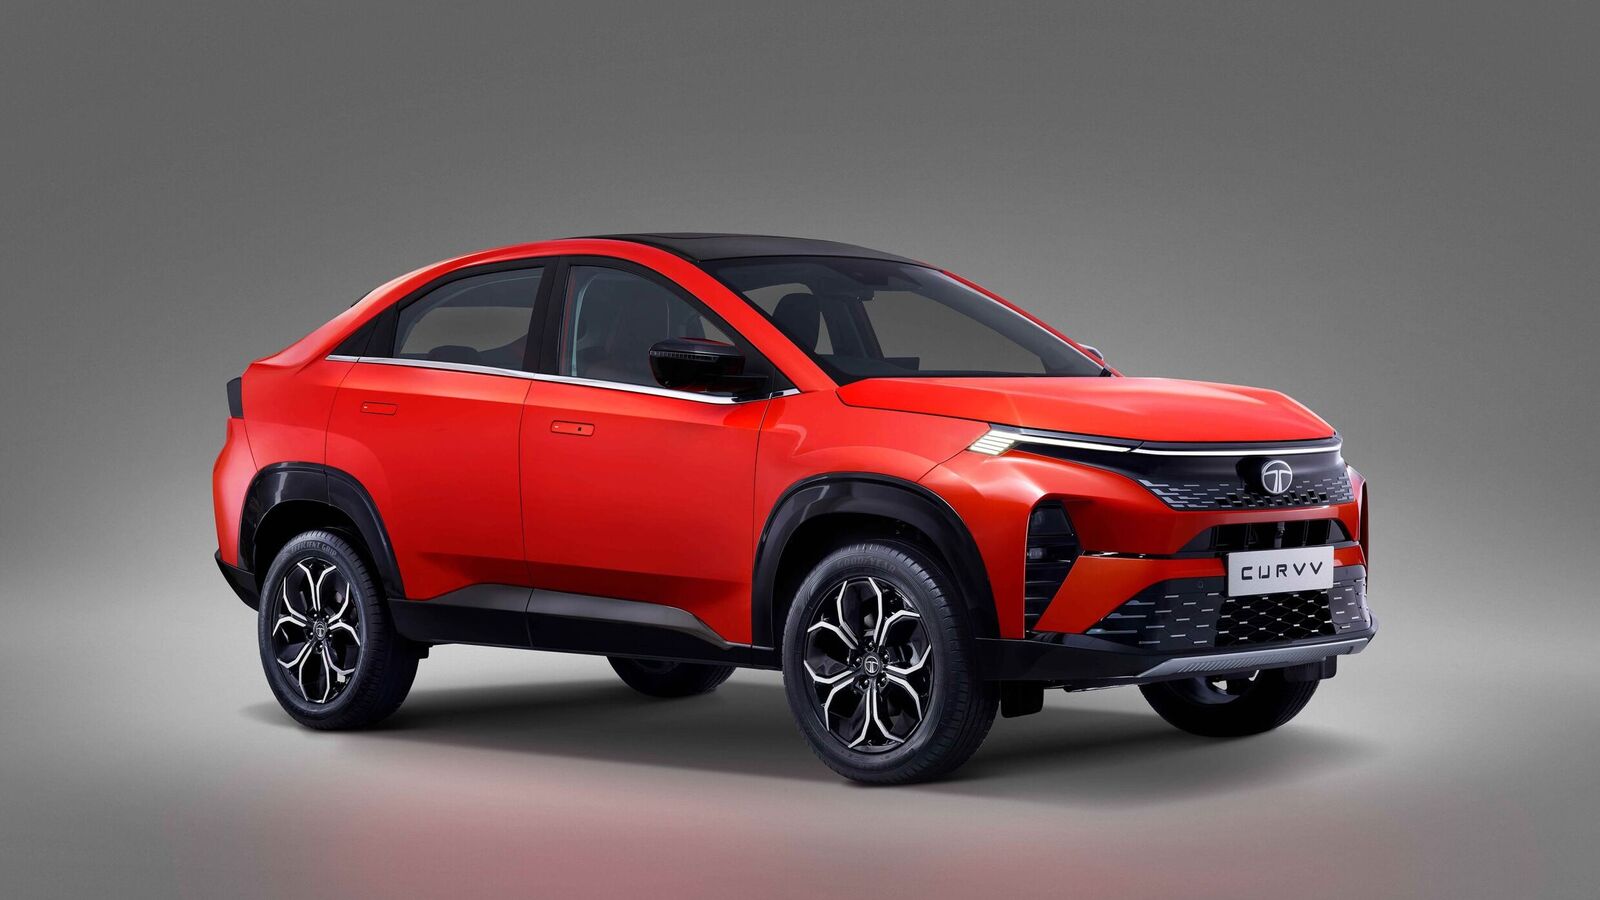 Tata Curvv set for launch. Should Hyundai Creta, Kia Seltos worry?